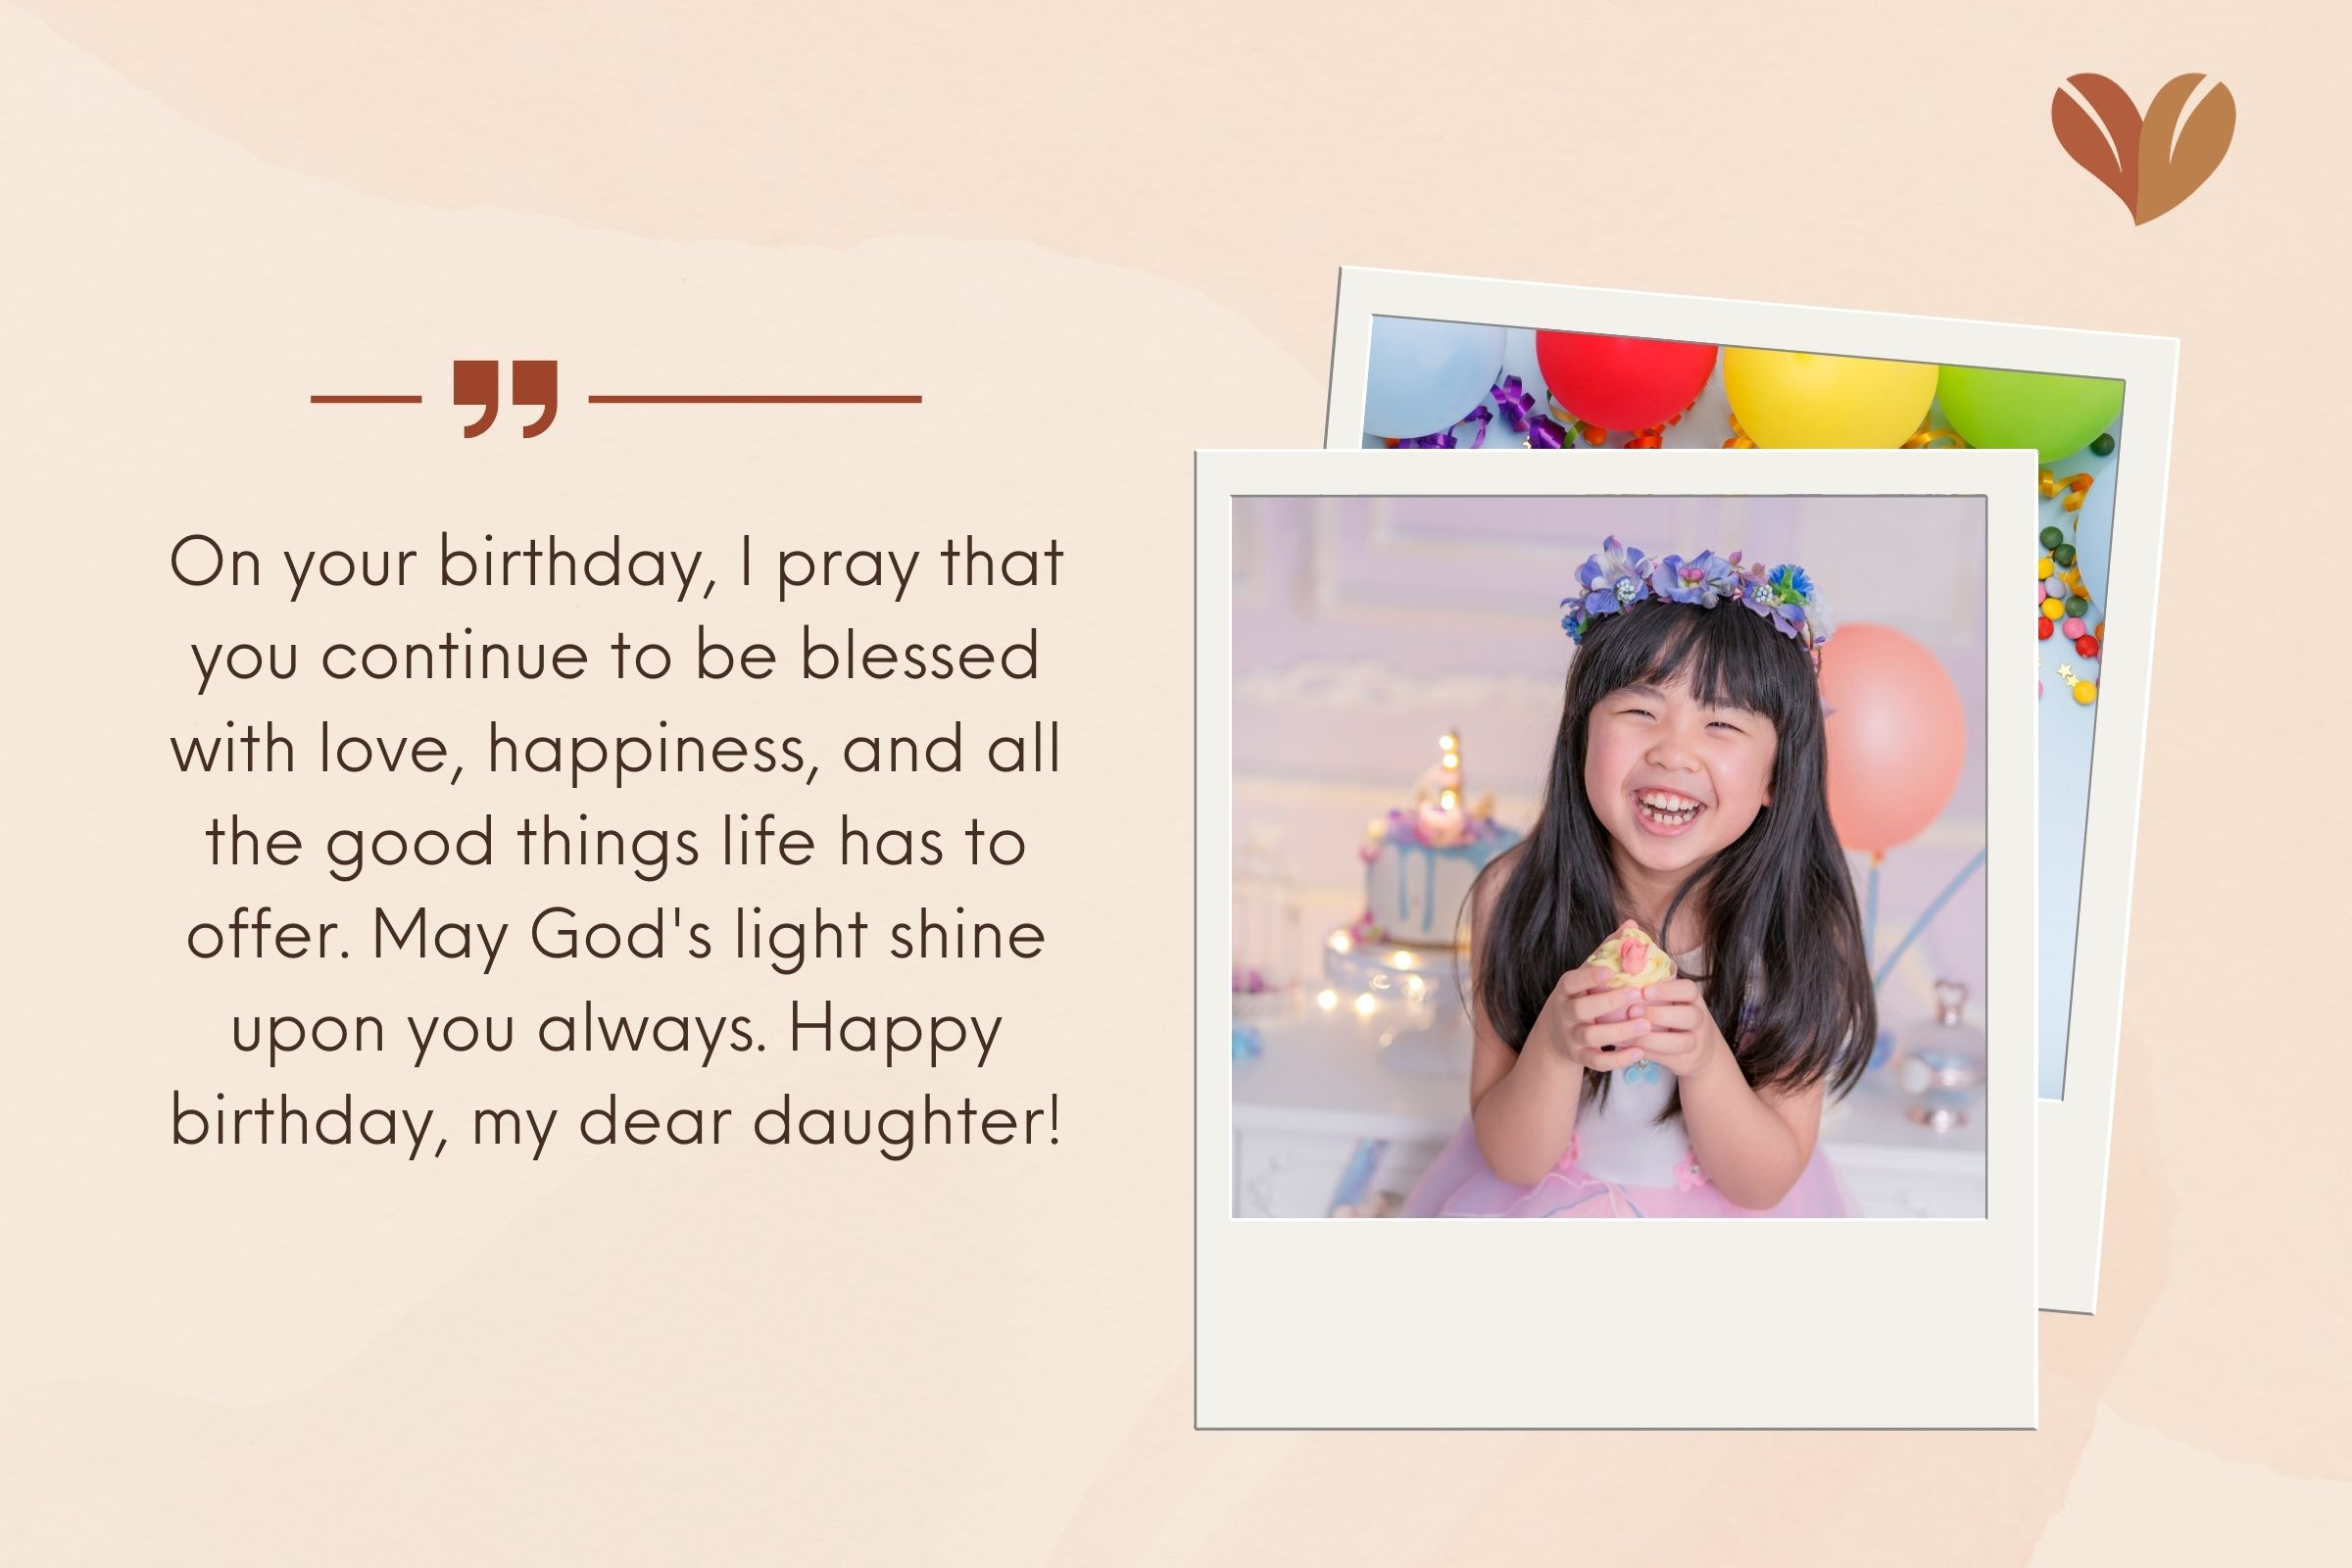 Joyful birthday greetings for daughter